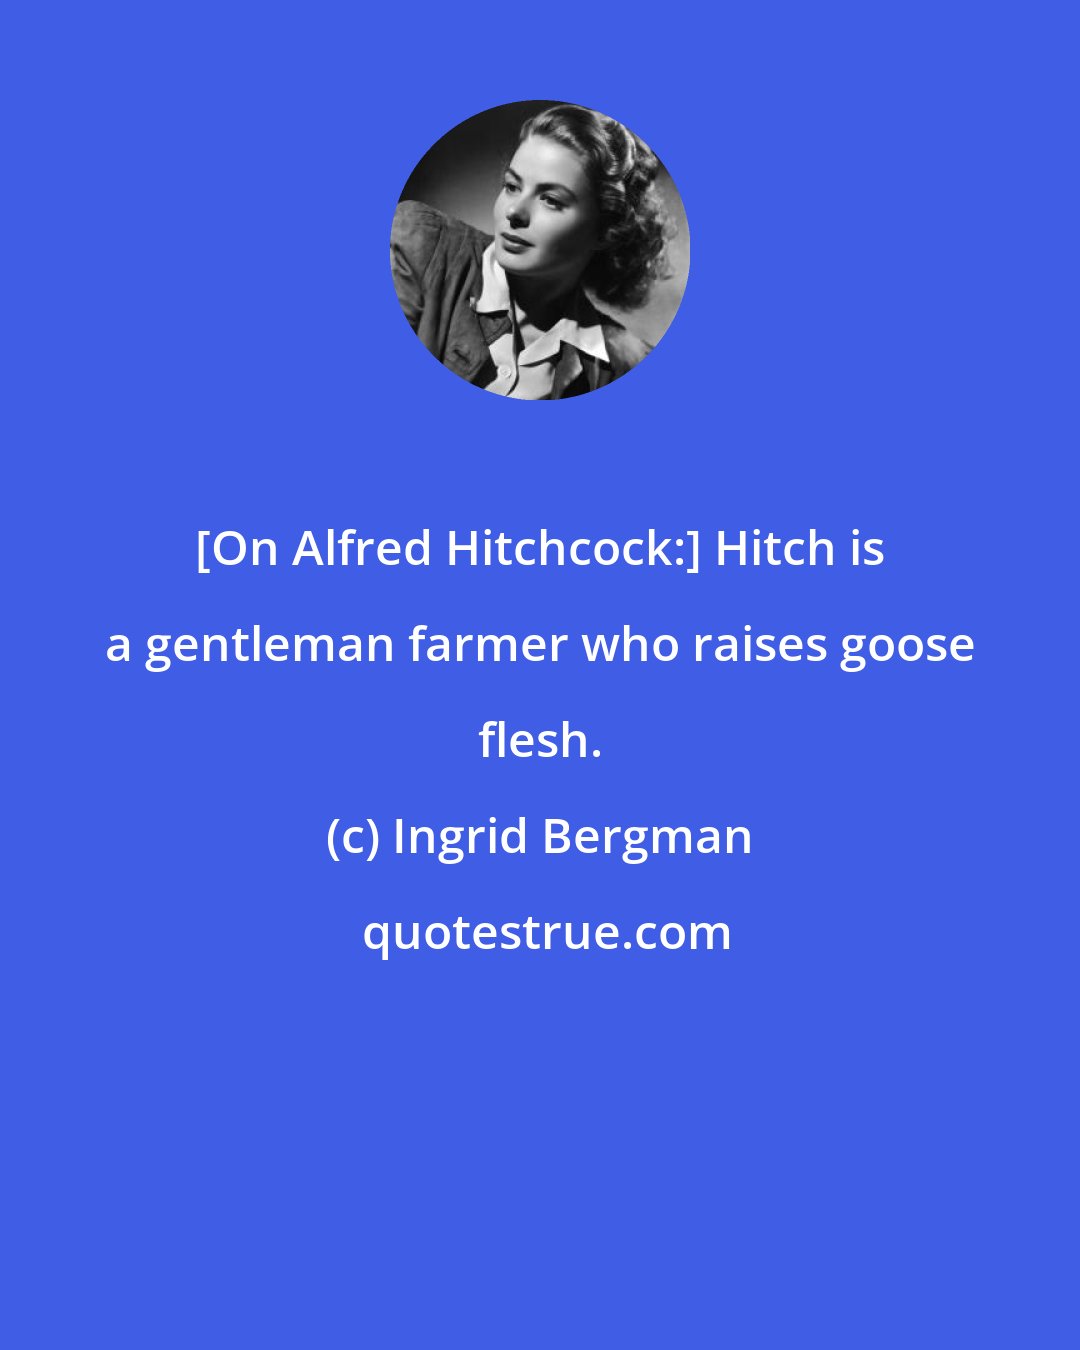 Ingrid Bergman: [On Alfred Hitchcock:] Hitch is a gentleman farmer who raises goose flesh.